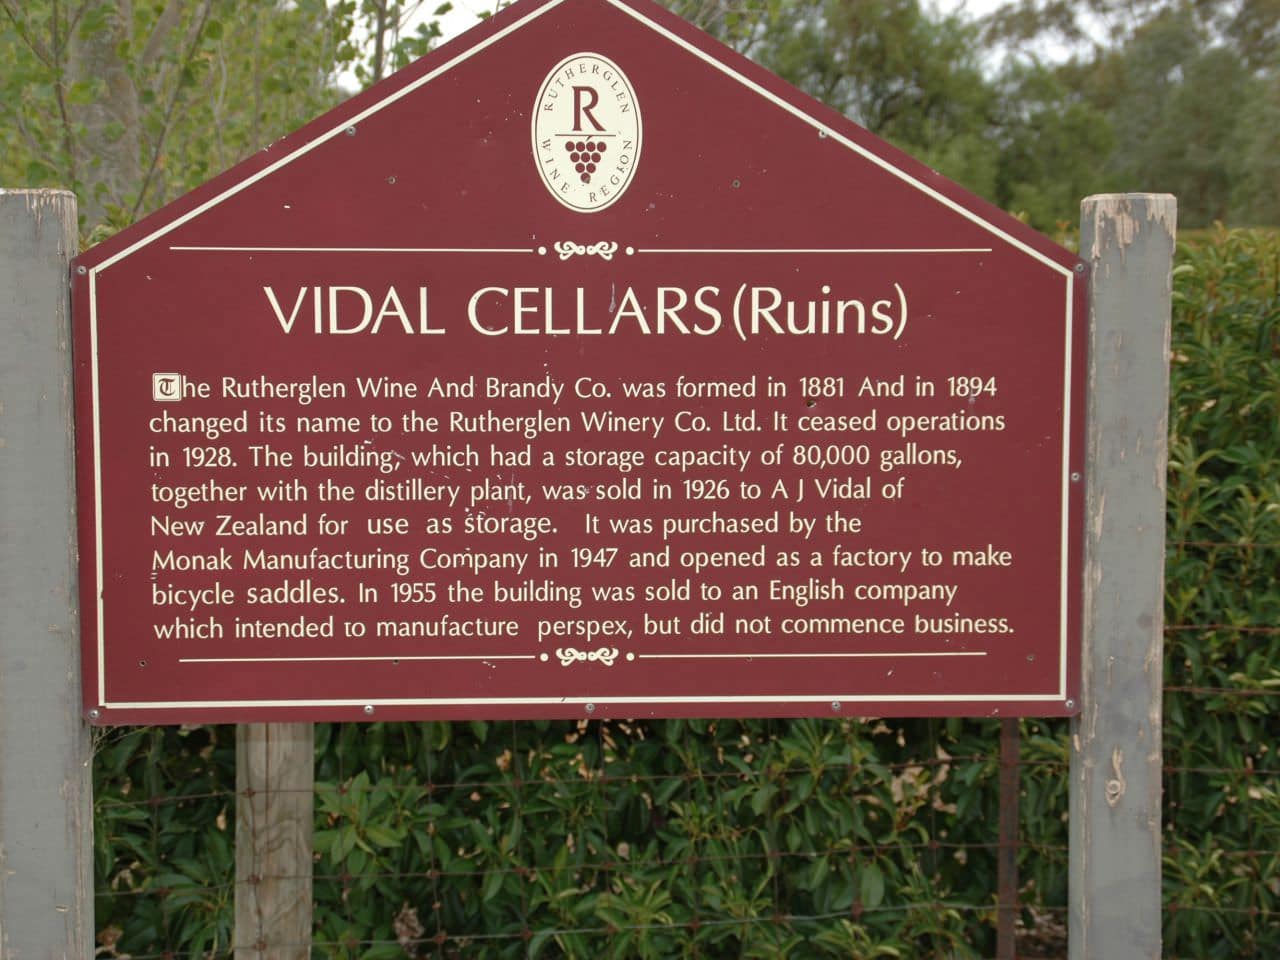 Burgundy plaque showing history of Vidal Cellars ruins